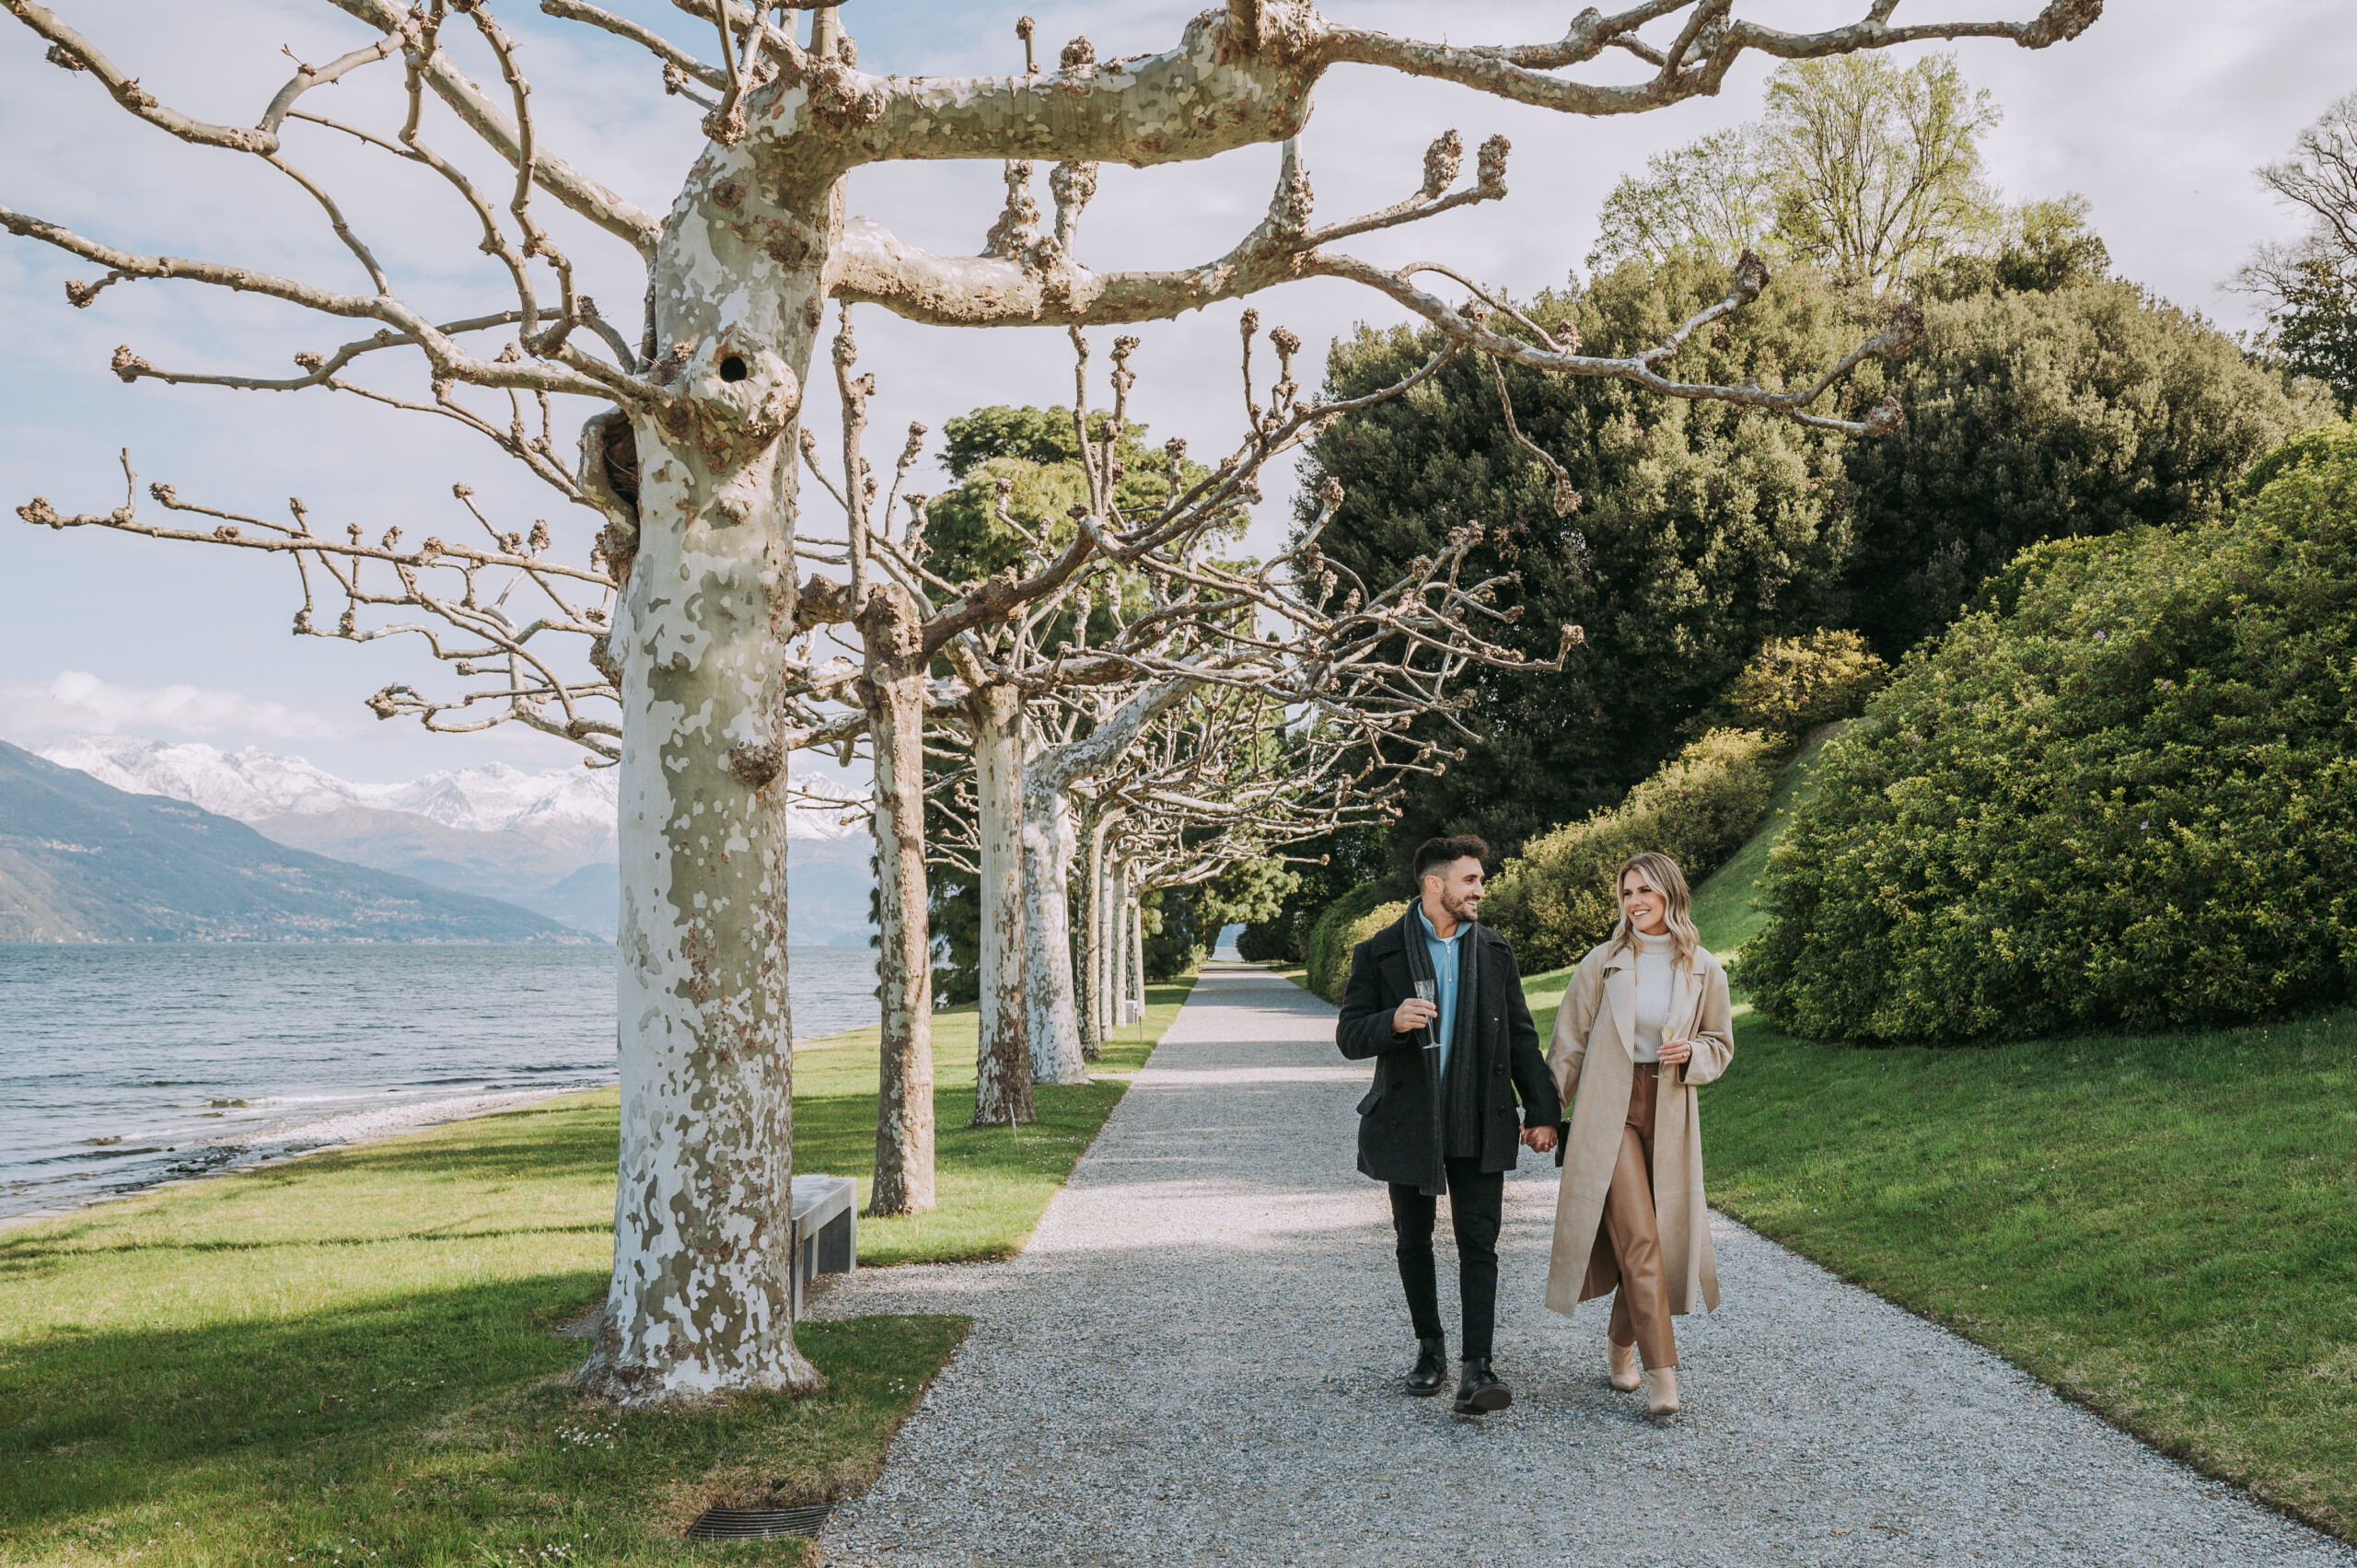 Proposal photoshoot by Riccardo, Localgrapher at Lake Como